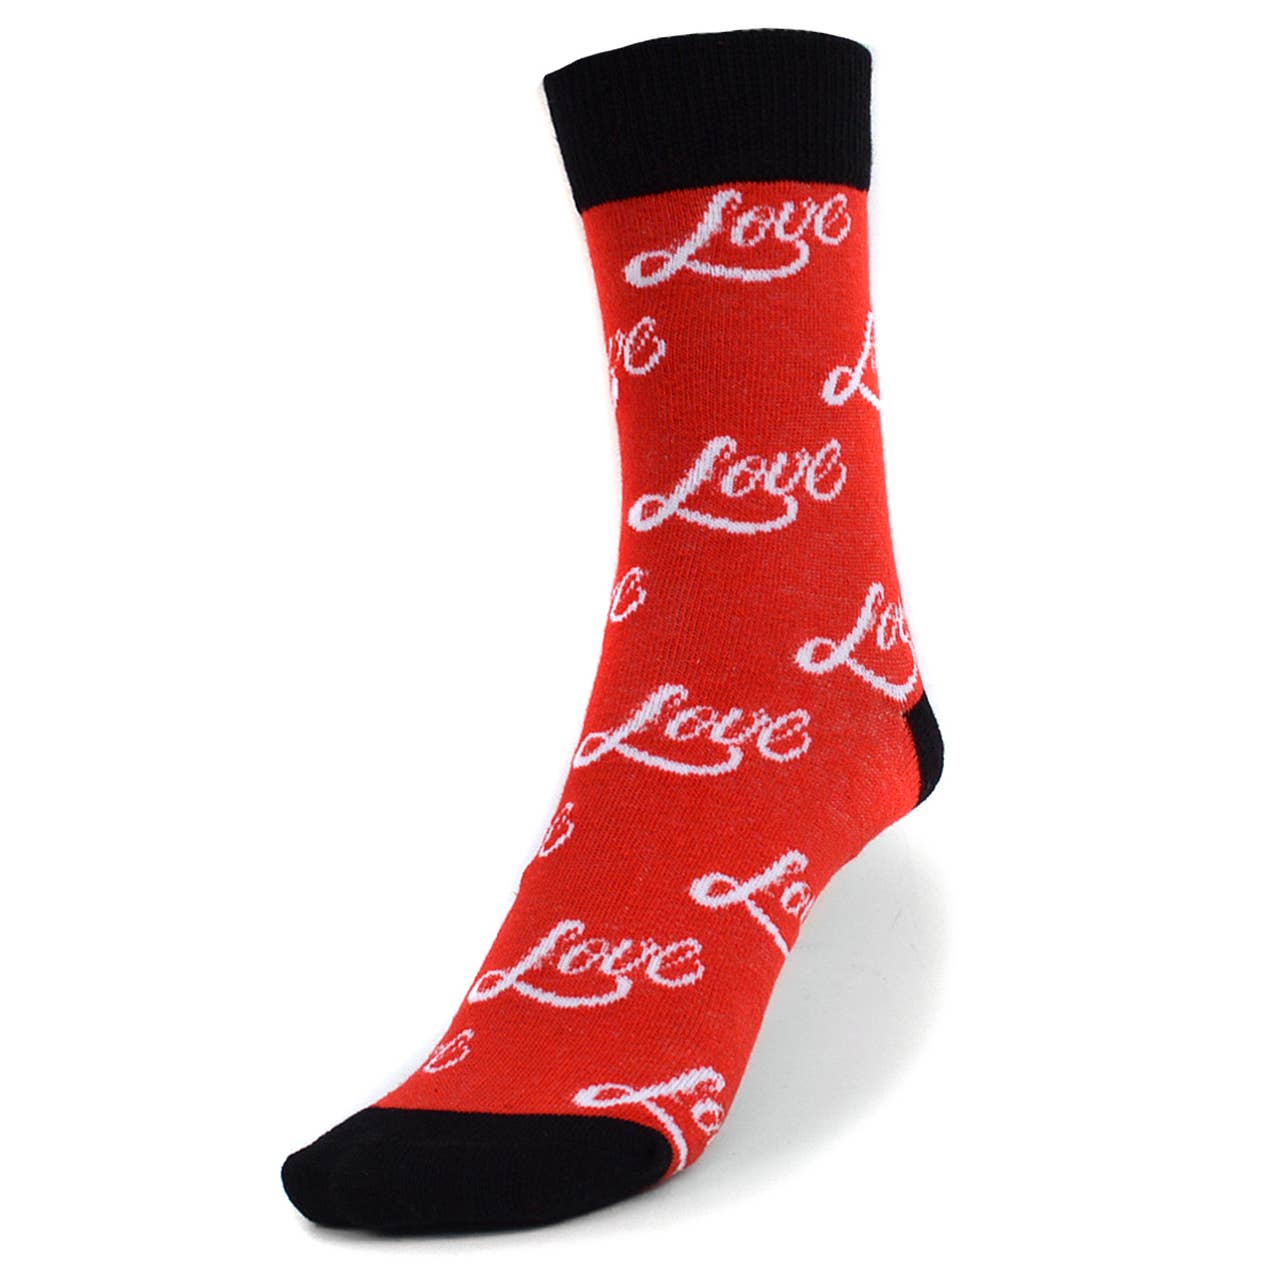 Women's Love Socks